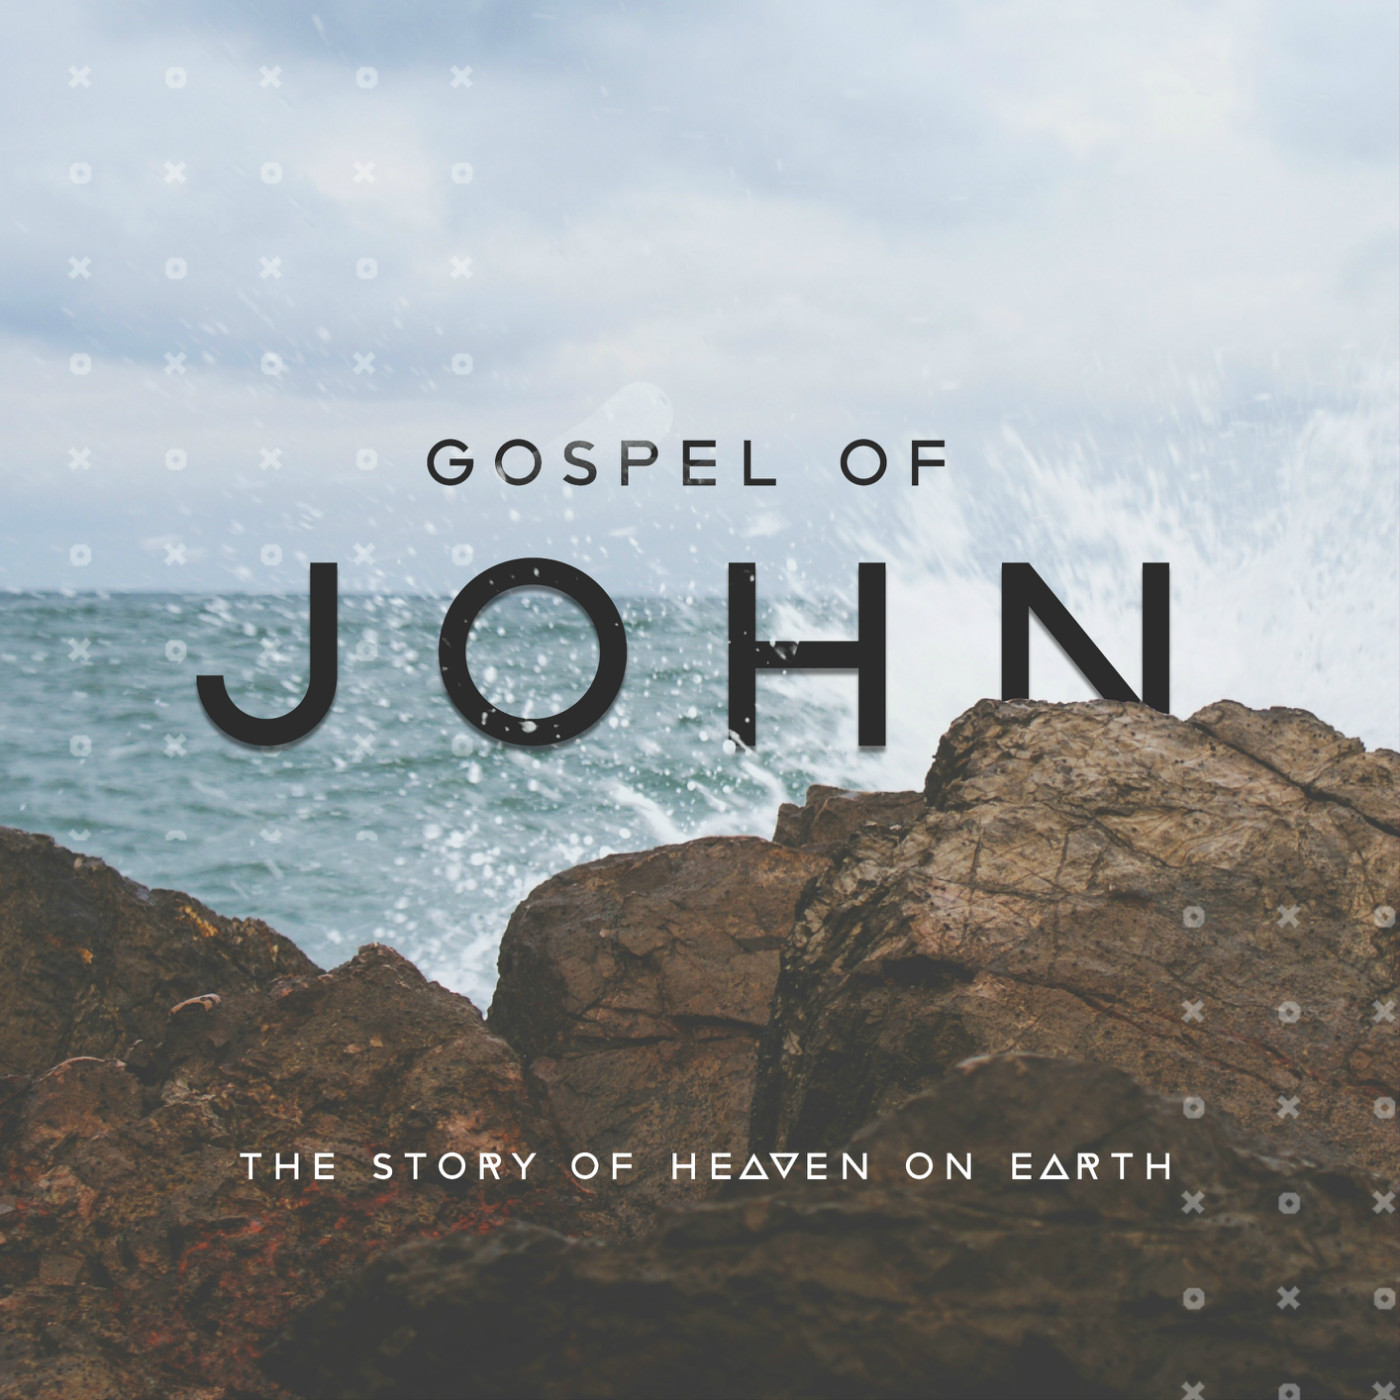 The Gospel of John Series: ”A call to servanthood” Part 17 